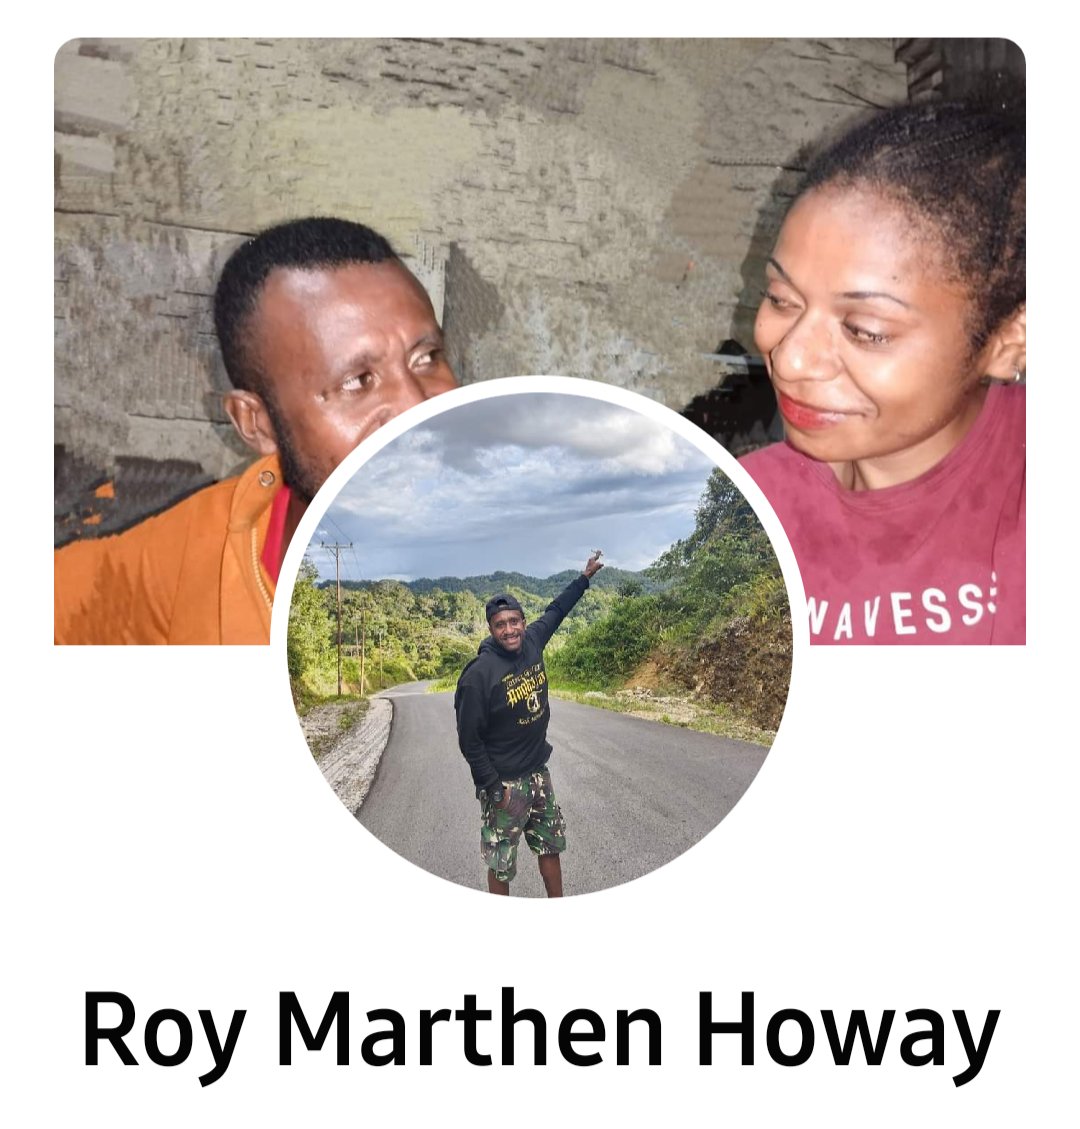 Foto-foto Roy Marthen Howay, DPO Kasus Mutilasi Timika
westpapuanews.org/foto-foto-roy-…
#PapuanLivesMatter
#BlackLivesMatter 
@Puspen_TNI @ChePapua @mohmahfudmd @titokarnavian_